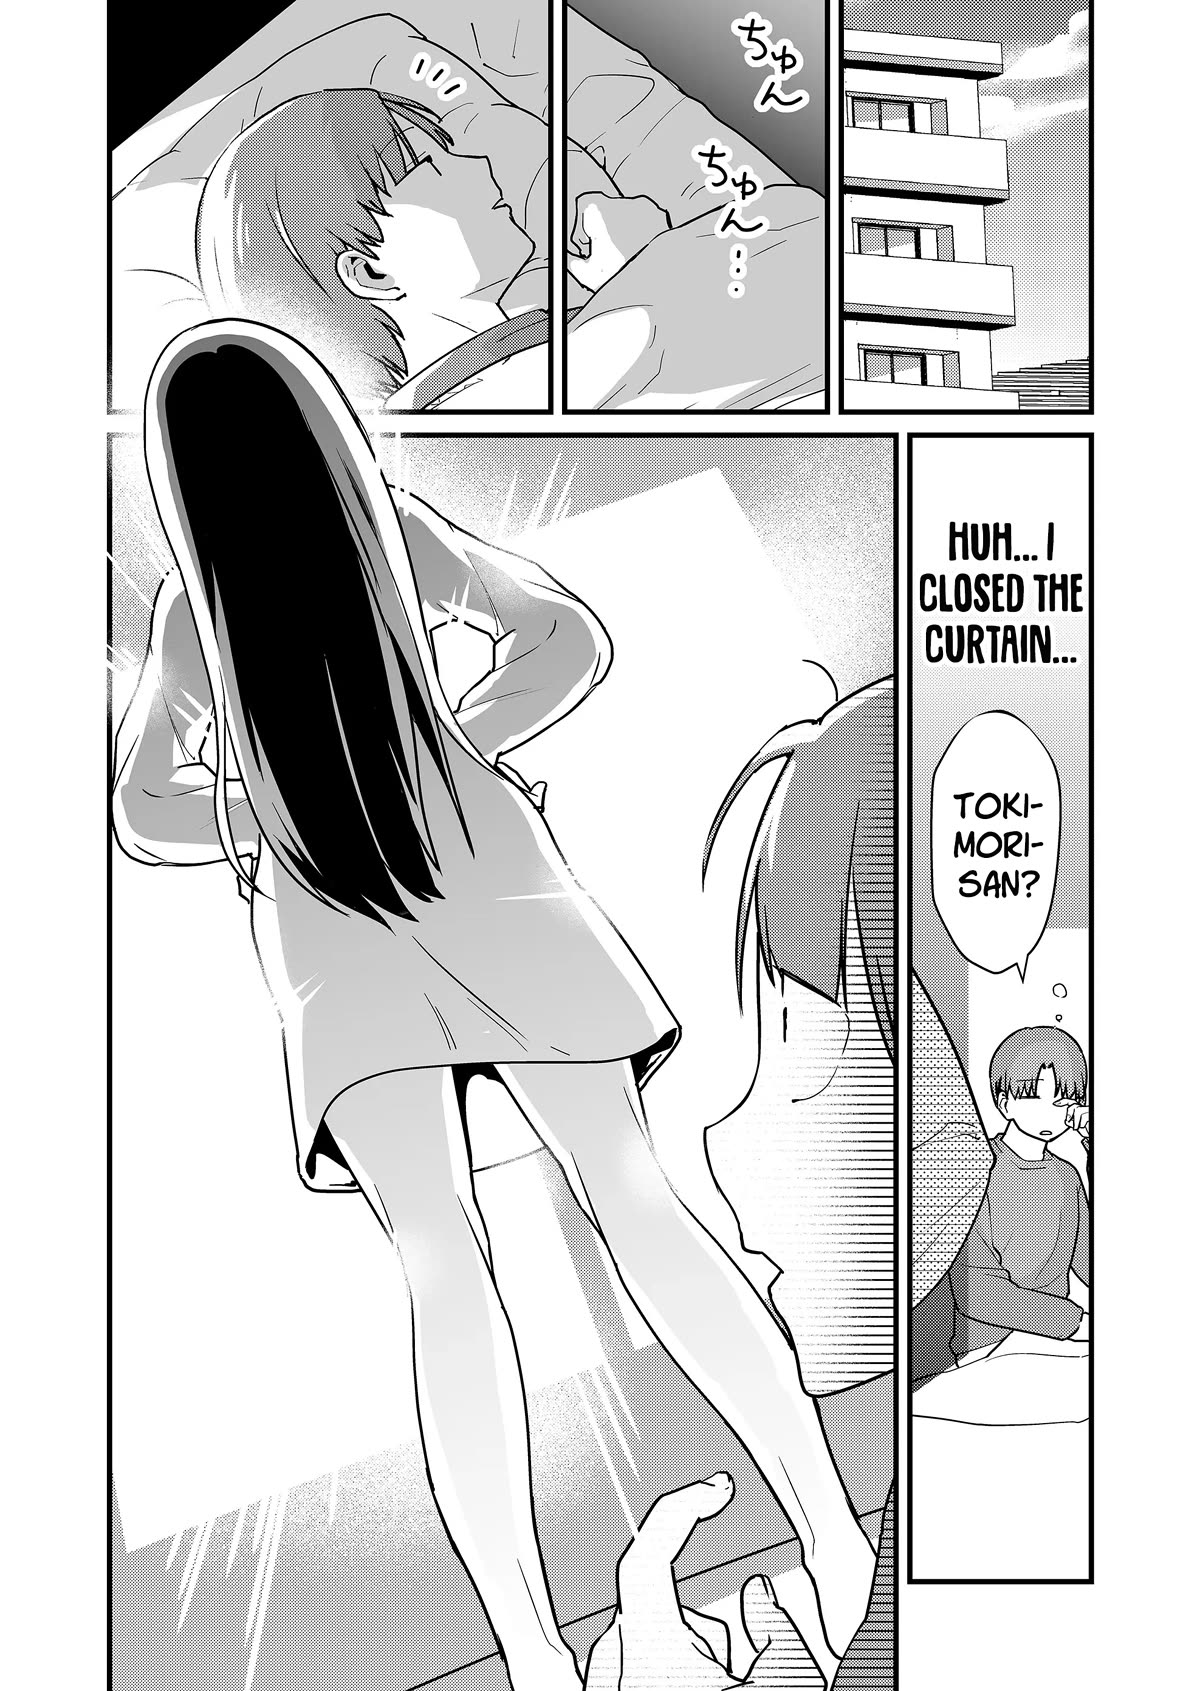 Tokimori-san Is Completely Defenseless!! - chapter 32 - #6